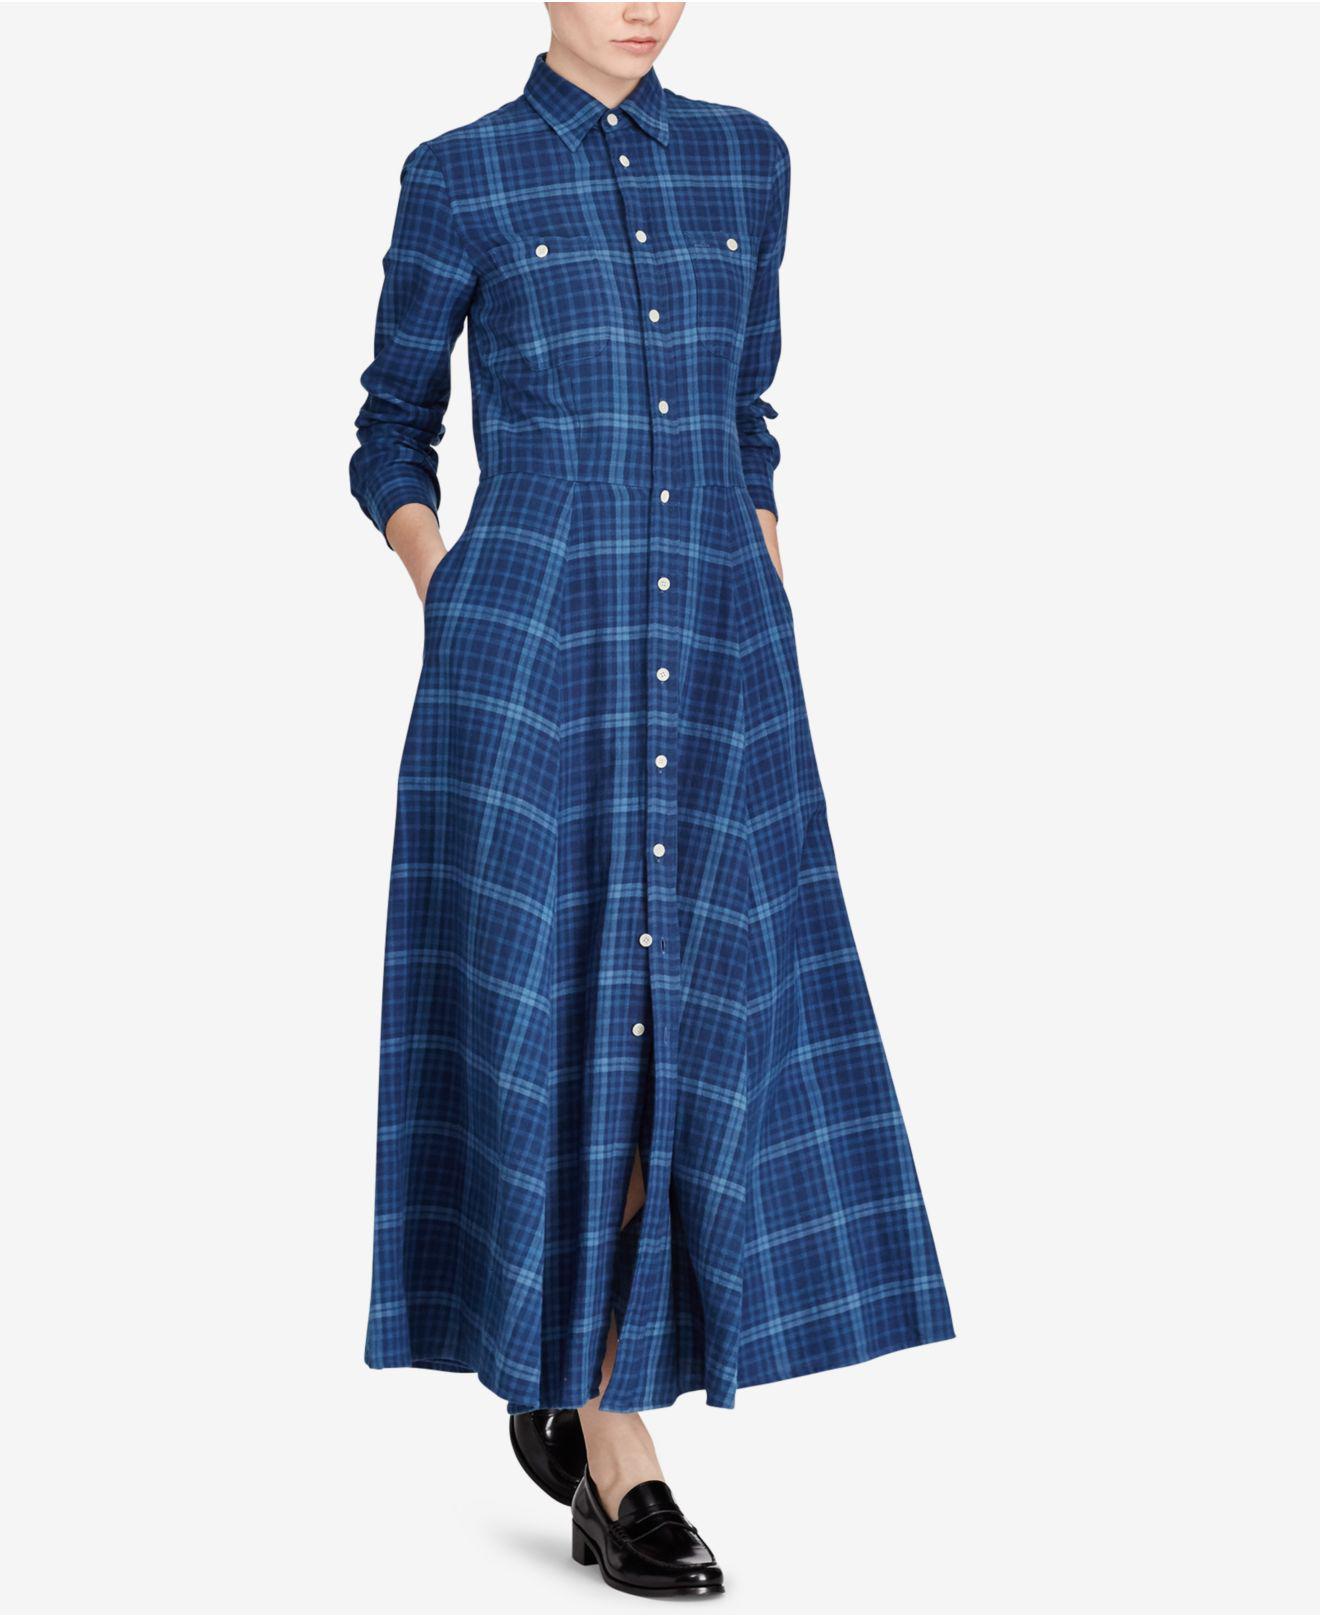 Polo Ralph Lauren Plaid Twill Cotton Shirtdress in Indigo (Blue) - Lyst